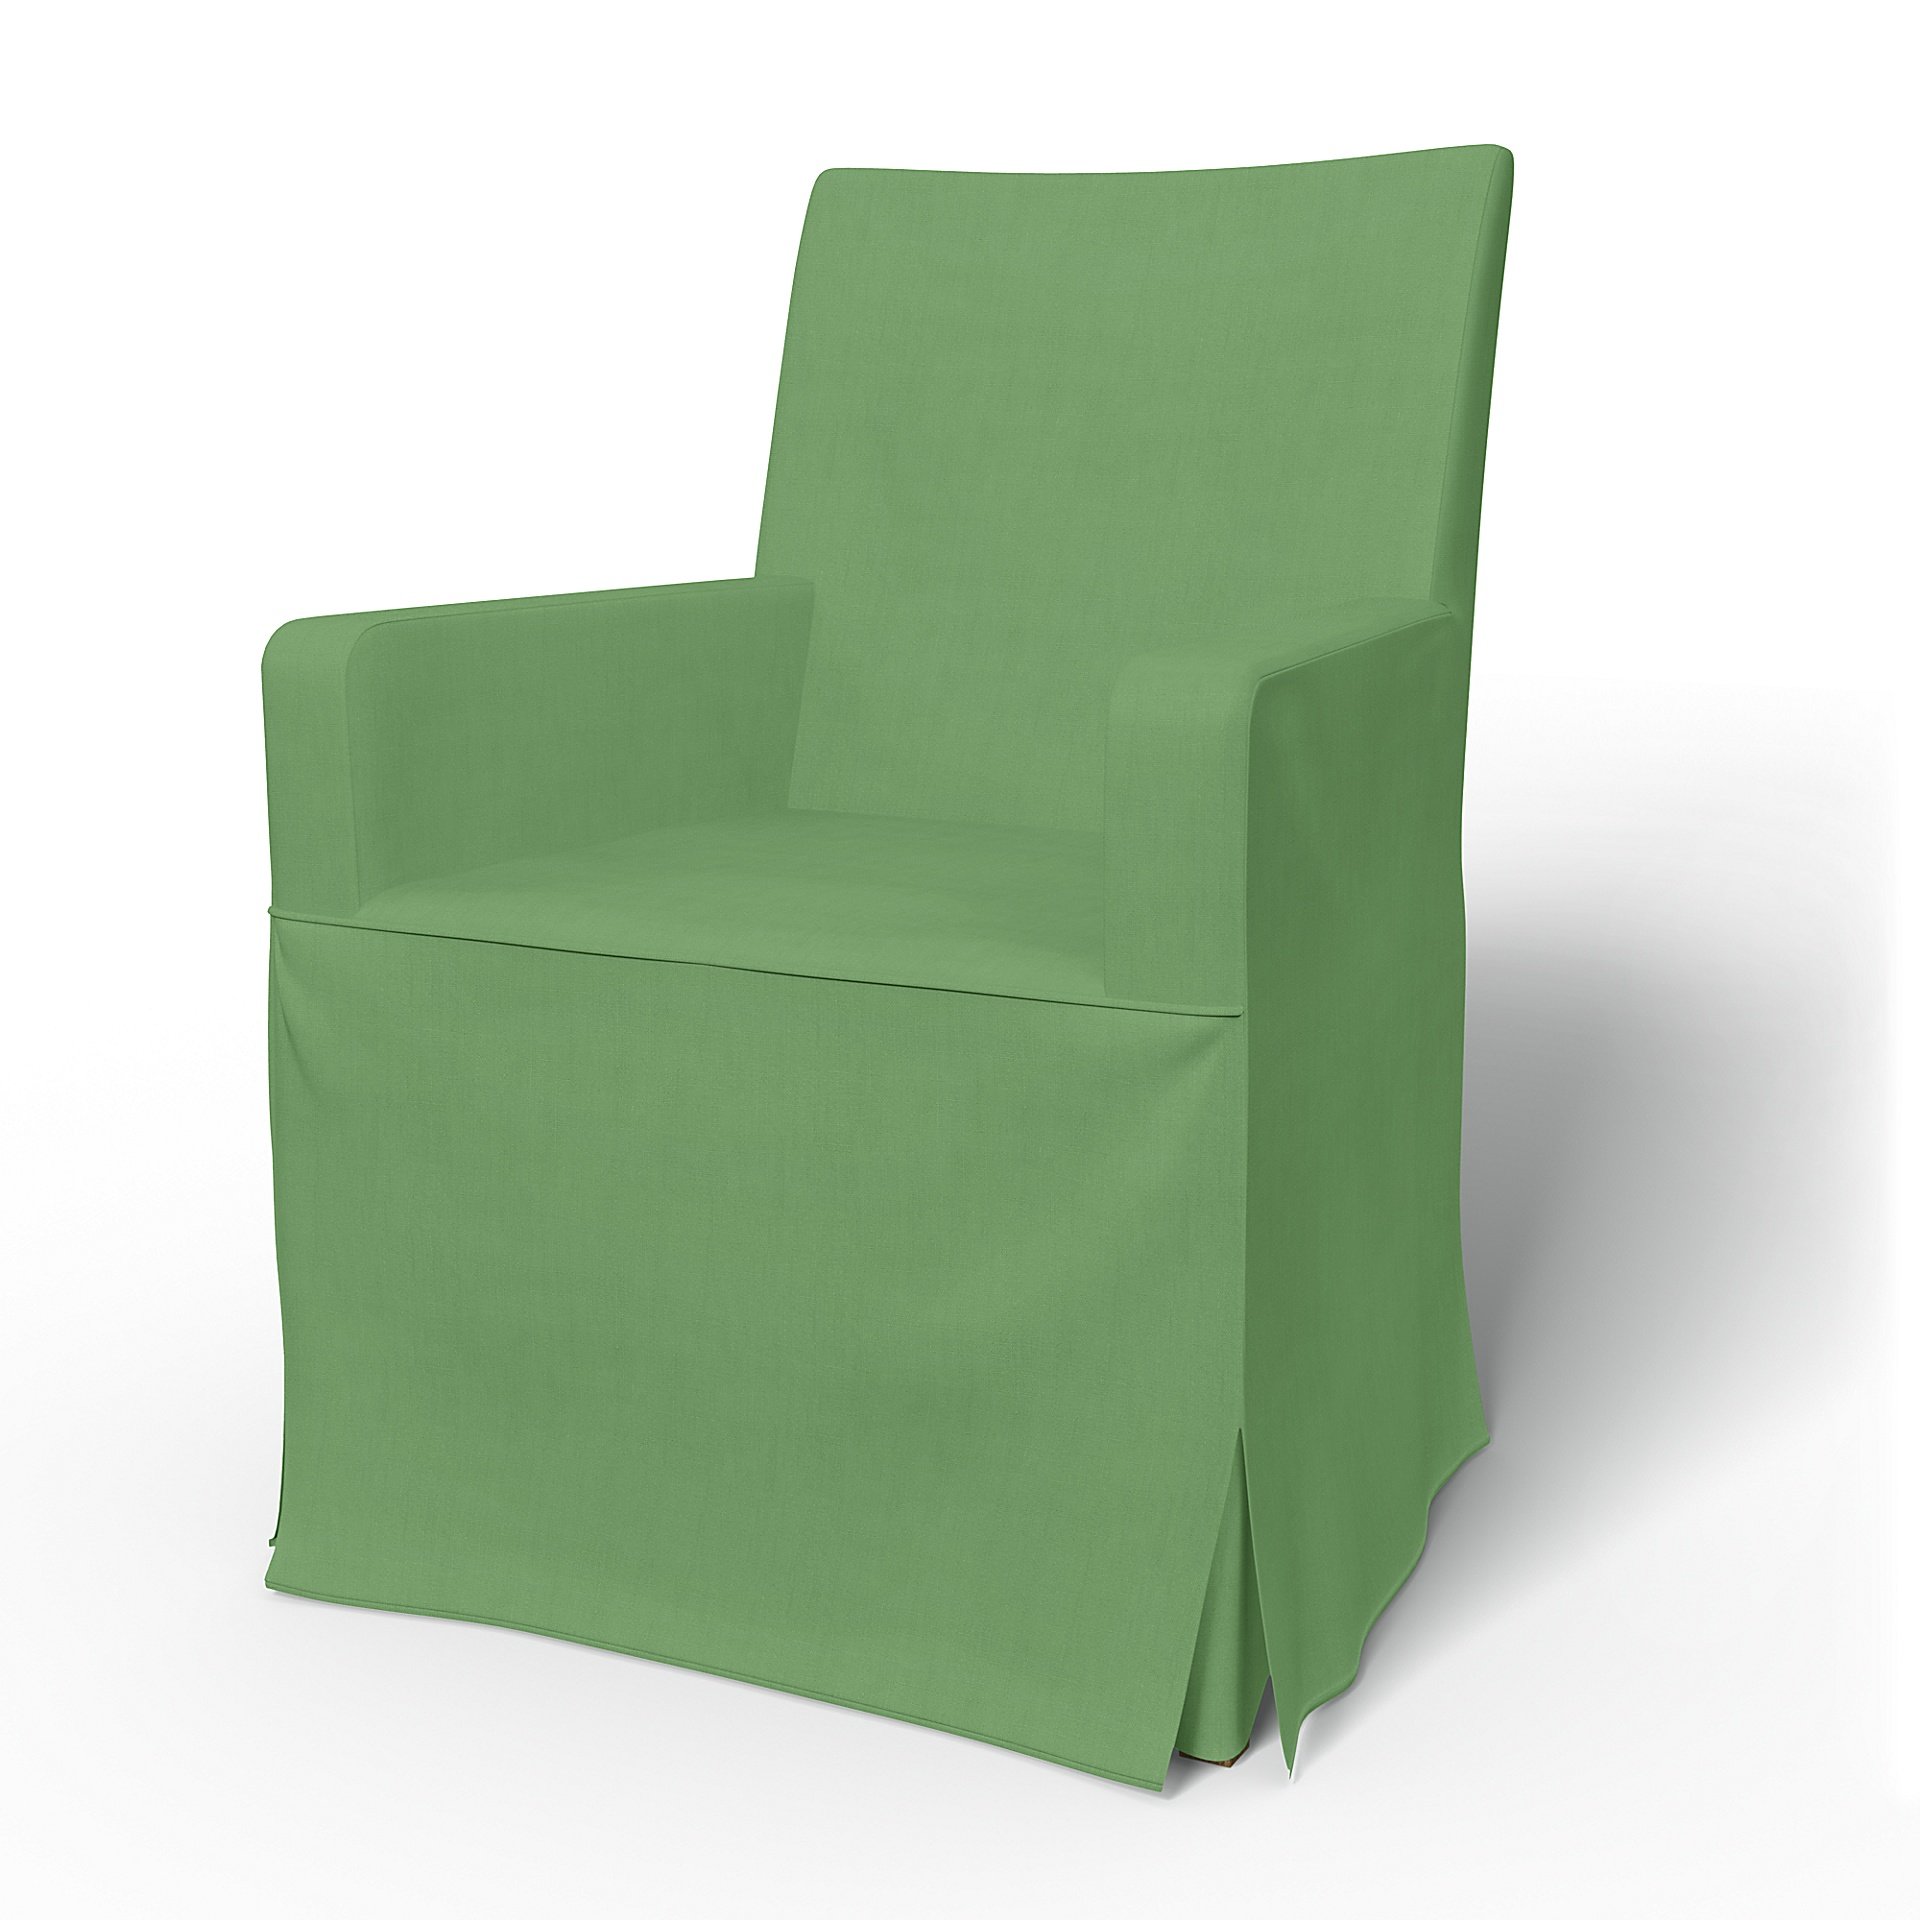 IKEA - Henriksdal, Chair cover w/ armrests, long skirt box pleat, Apple Green, Linen - Bemz